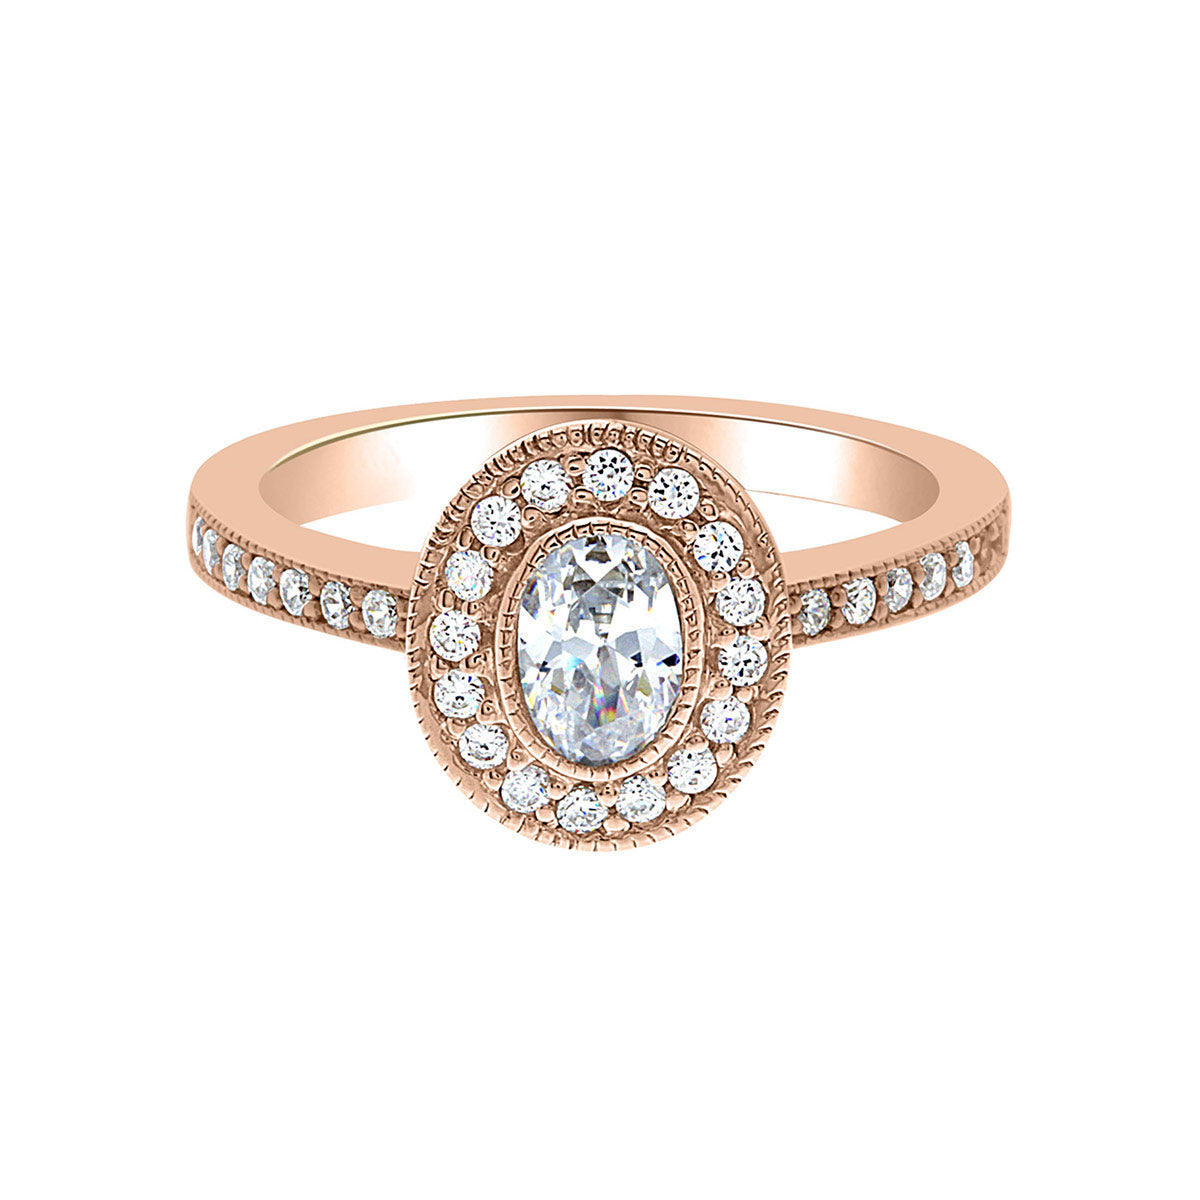 Milgrain Detail Engagement Ring in white gold in rose gold